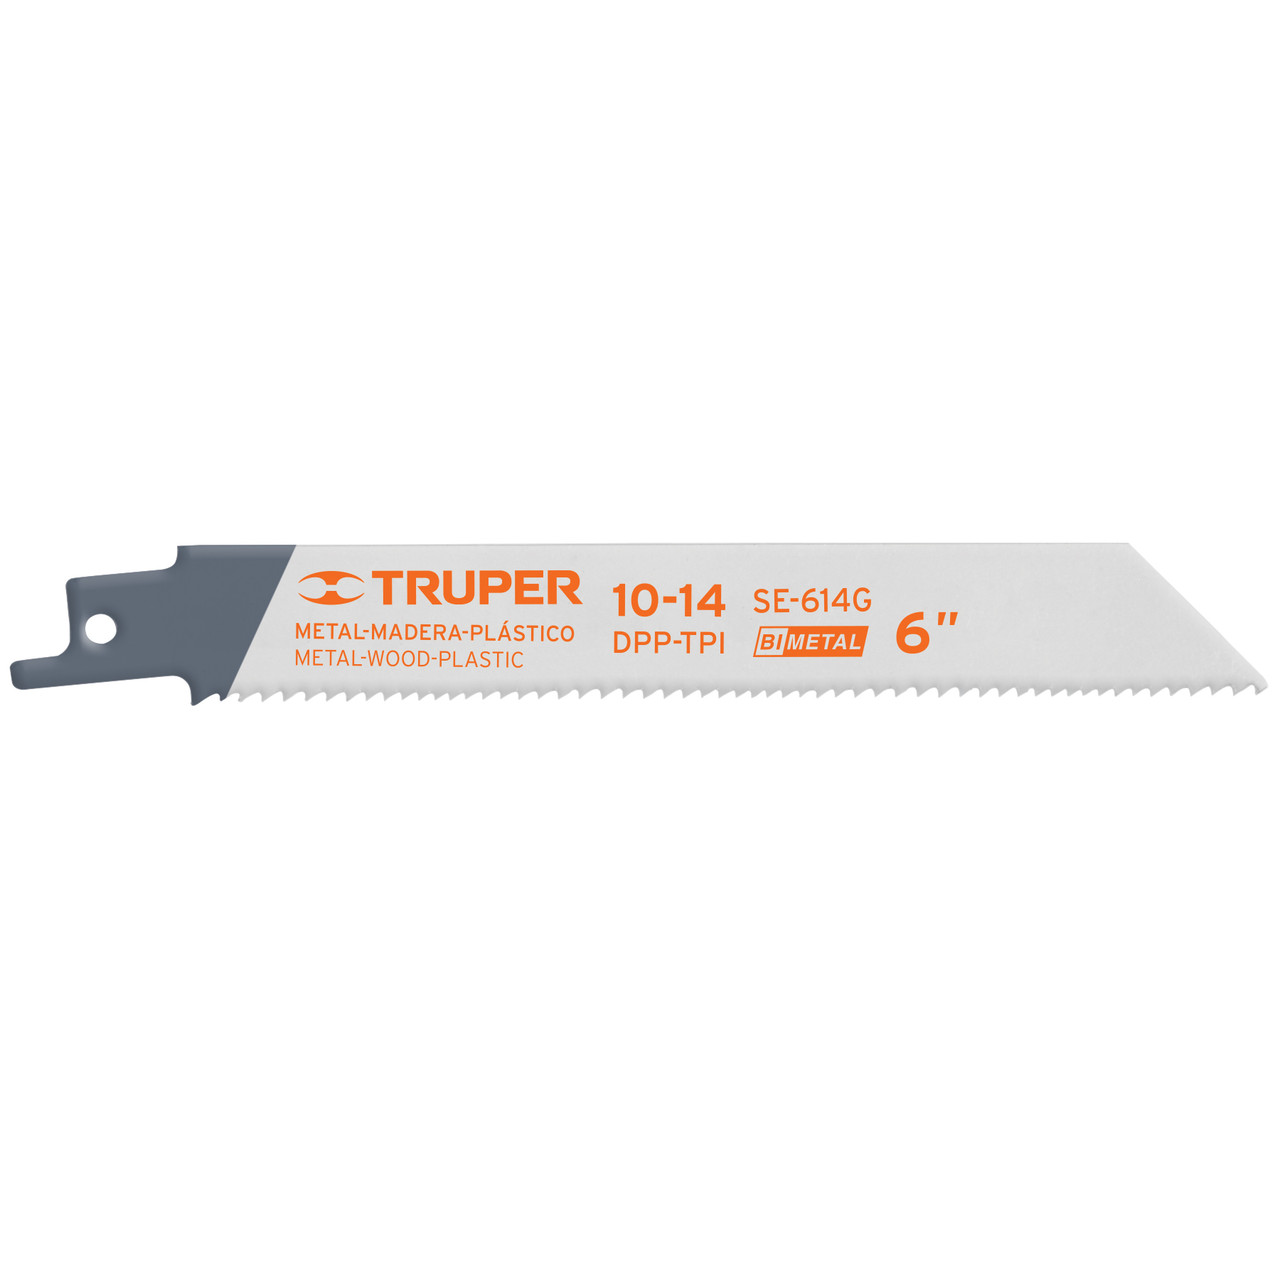 Truper 6" 1-14 TPI Reciprocating Saw Blade (2pc) #10790-2 Pack